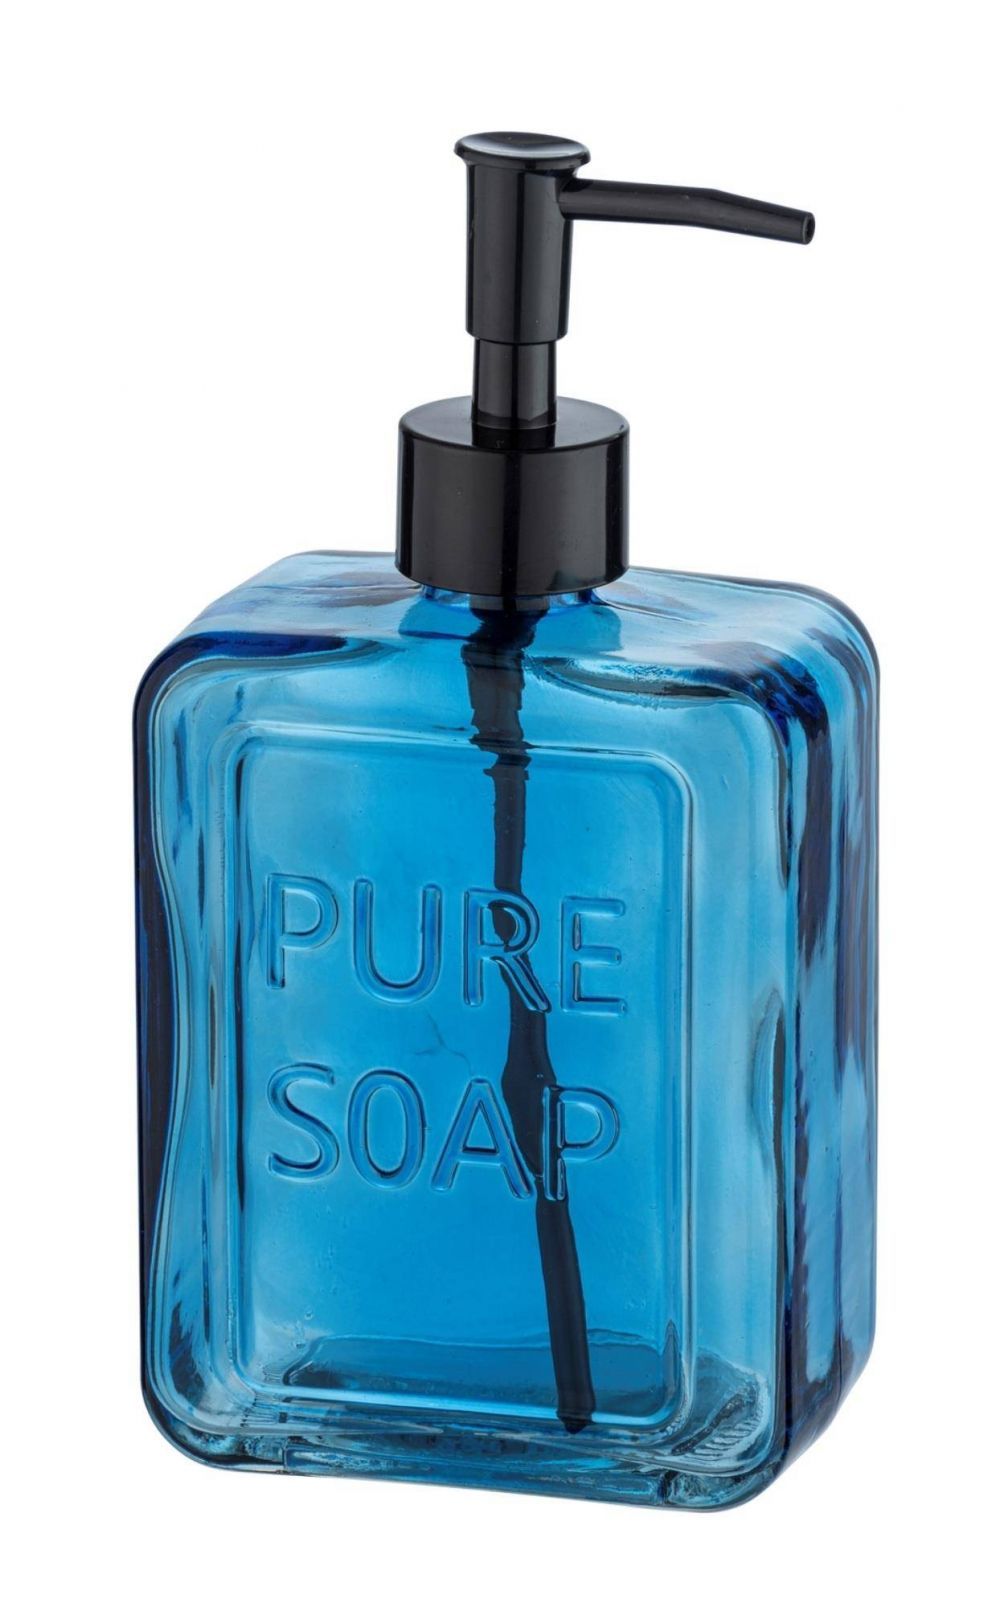 Dávkovač mýdla PURE, 550 ml, skleněný, modrý, Wenko - EDAXO.CZ s.r.o.